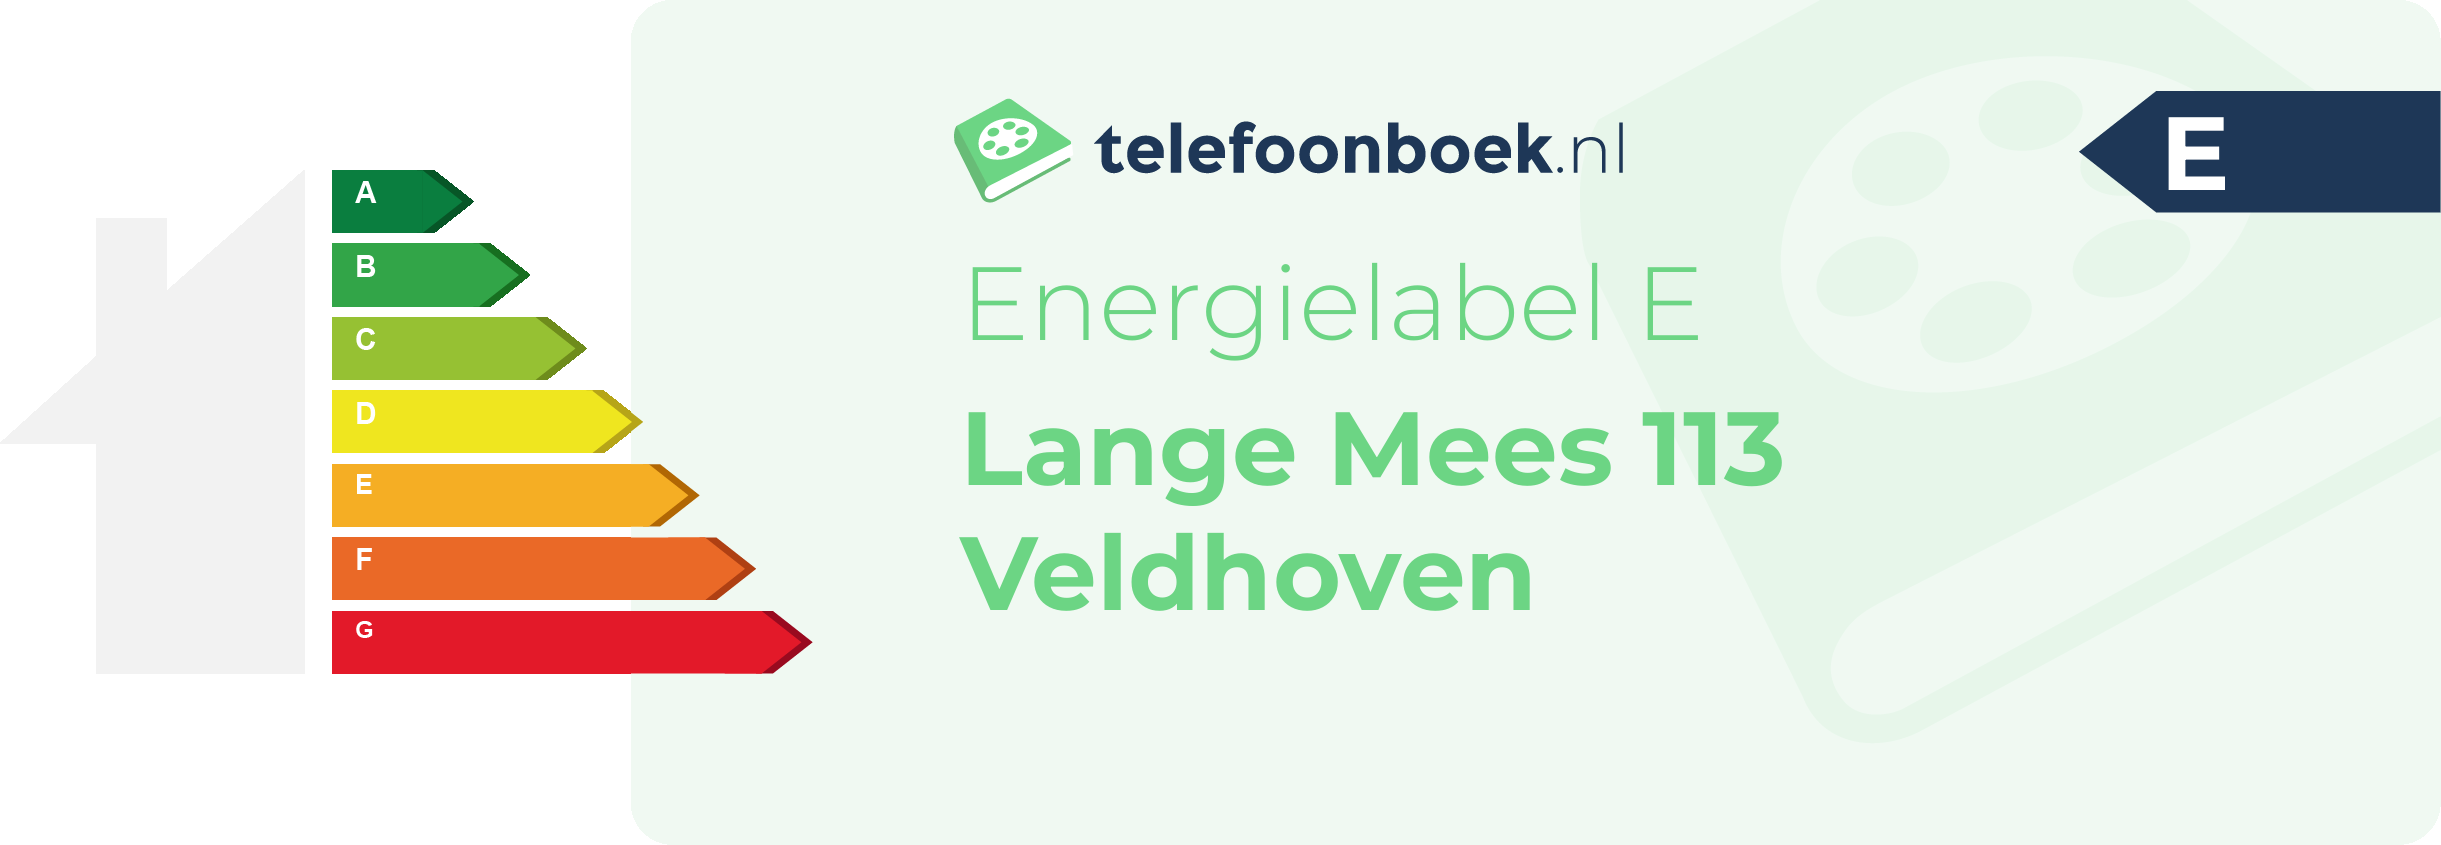 Energielabel Lange Mees 113 Veldhoven